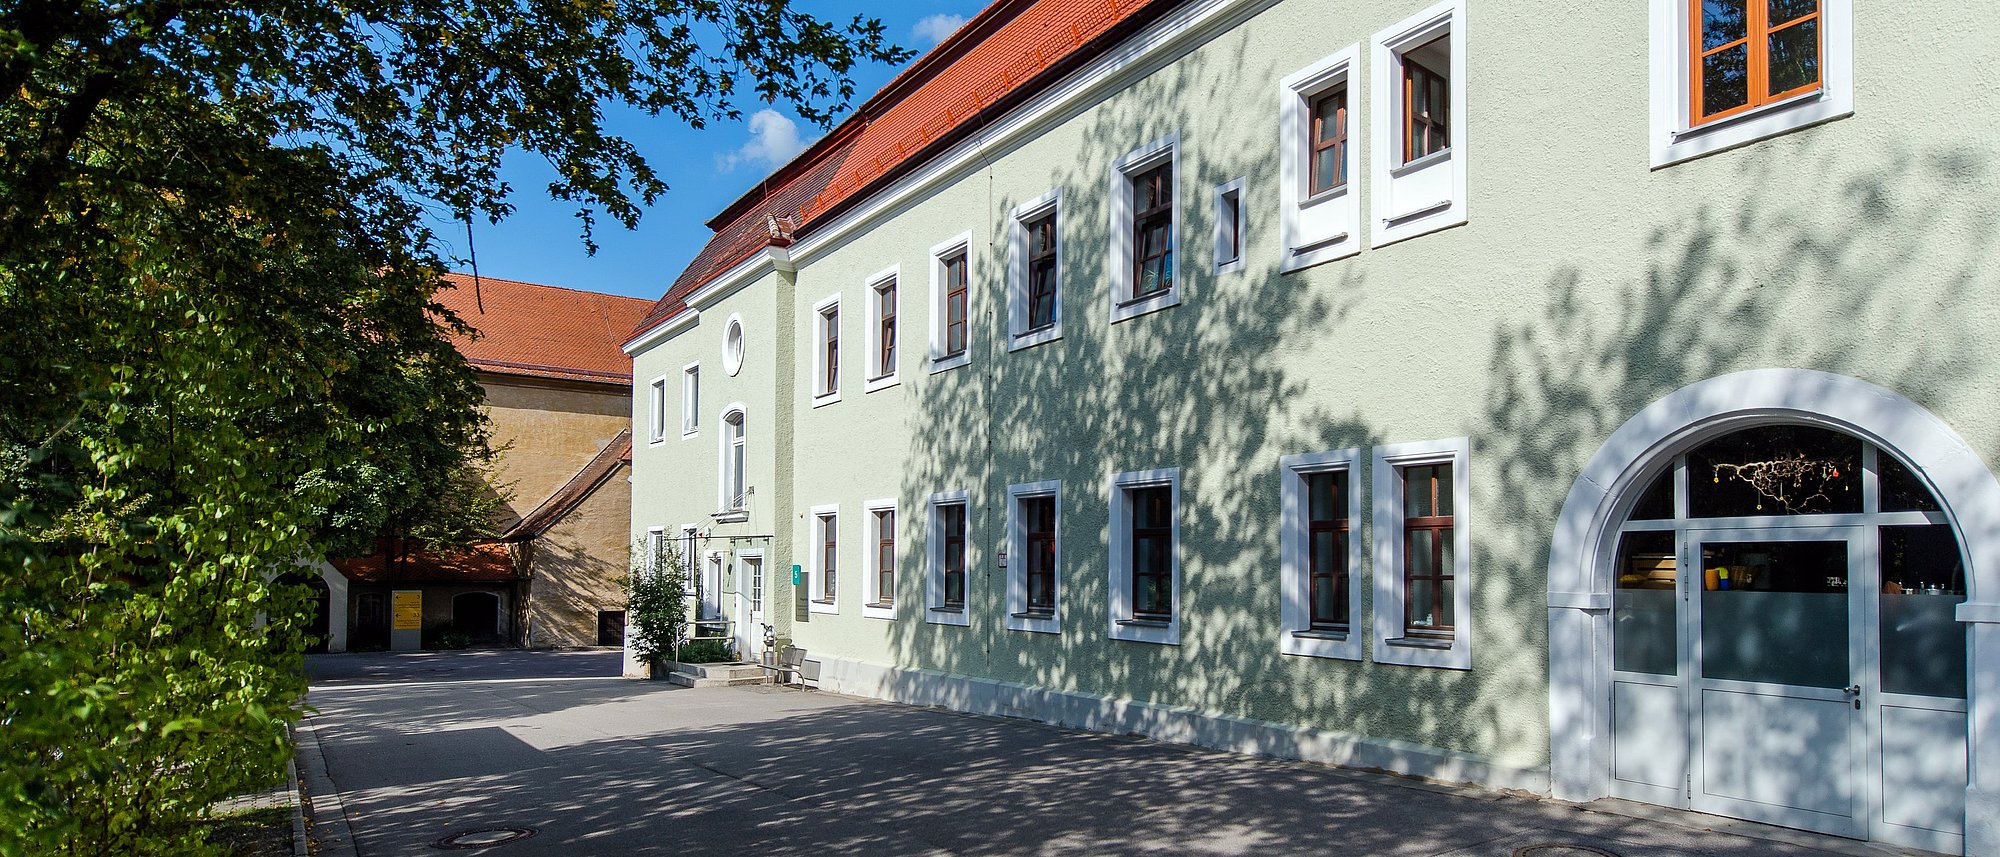 Psychiatrisches Pflegeheim HAUS 5 medbo Regensburg (Frank Hübler | medbo)